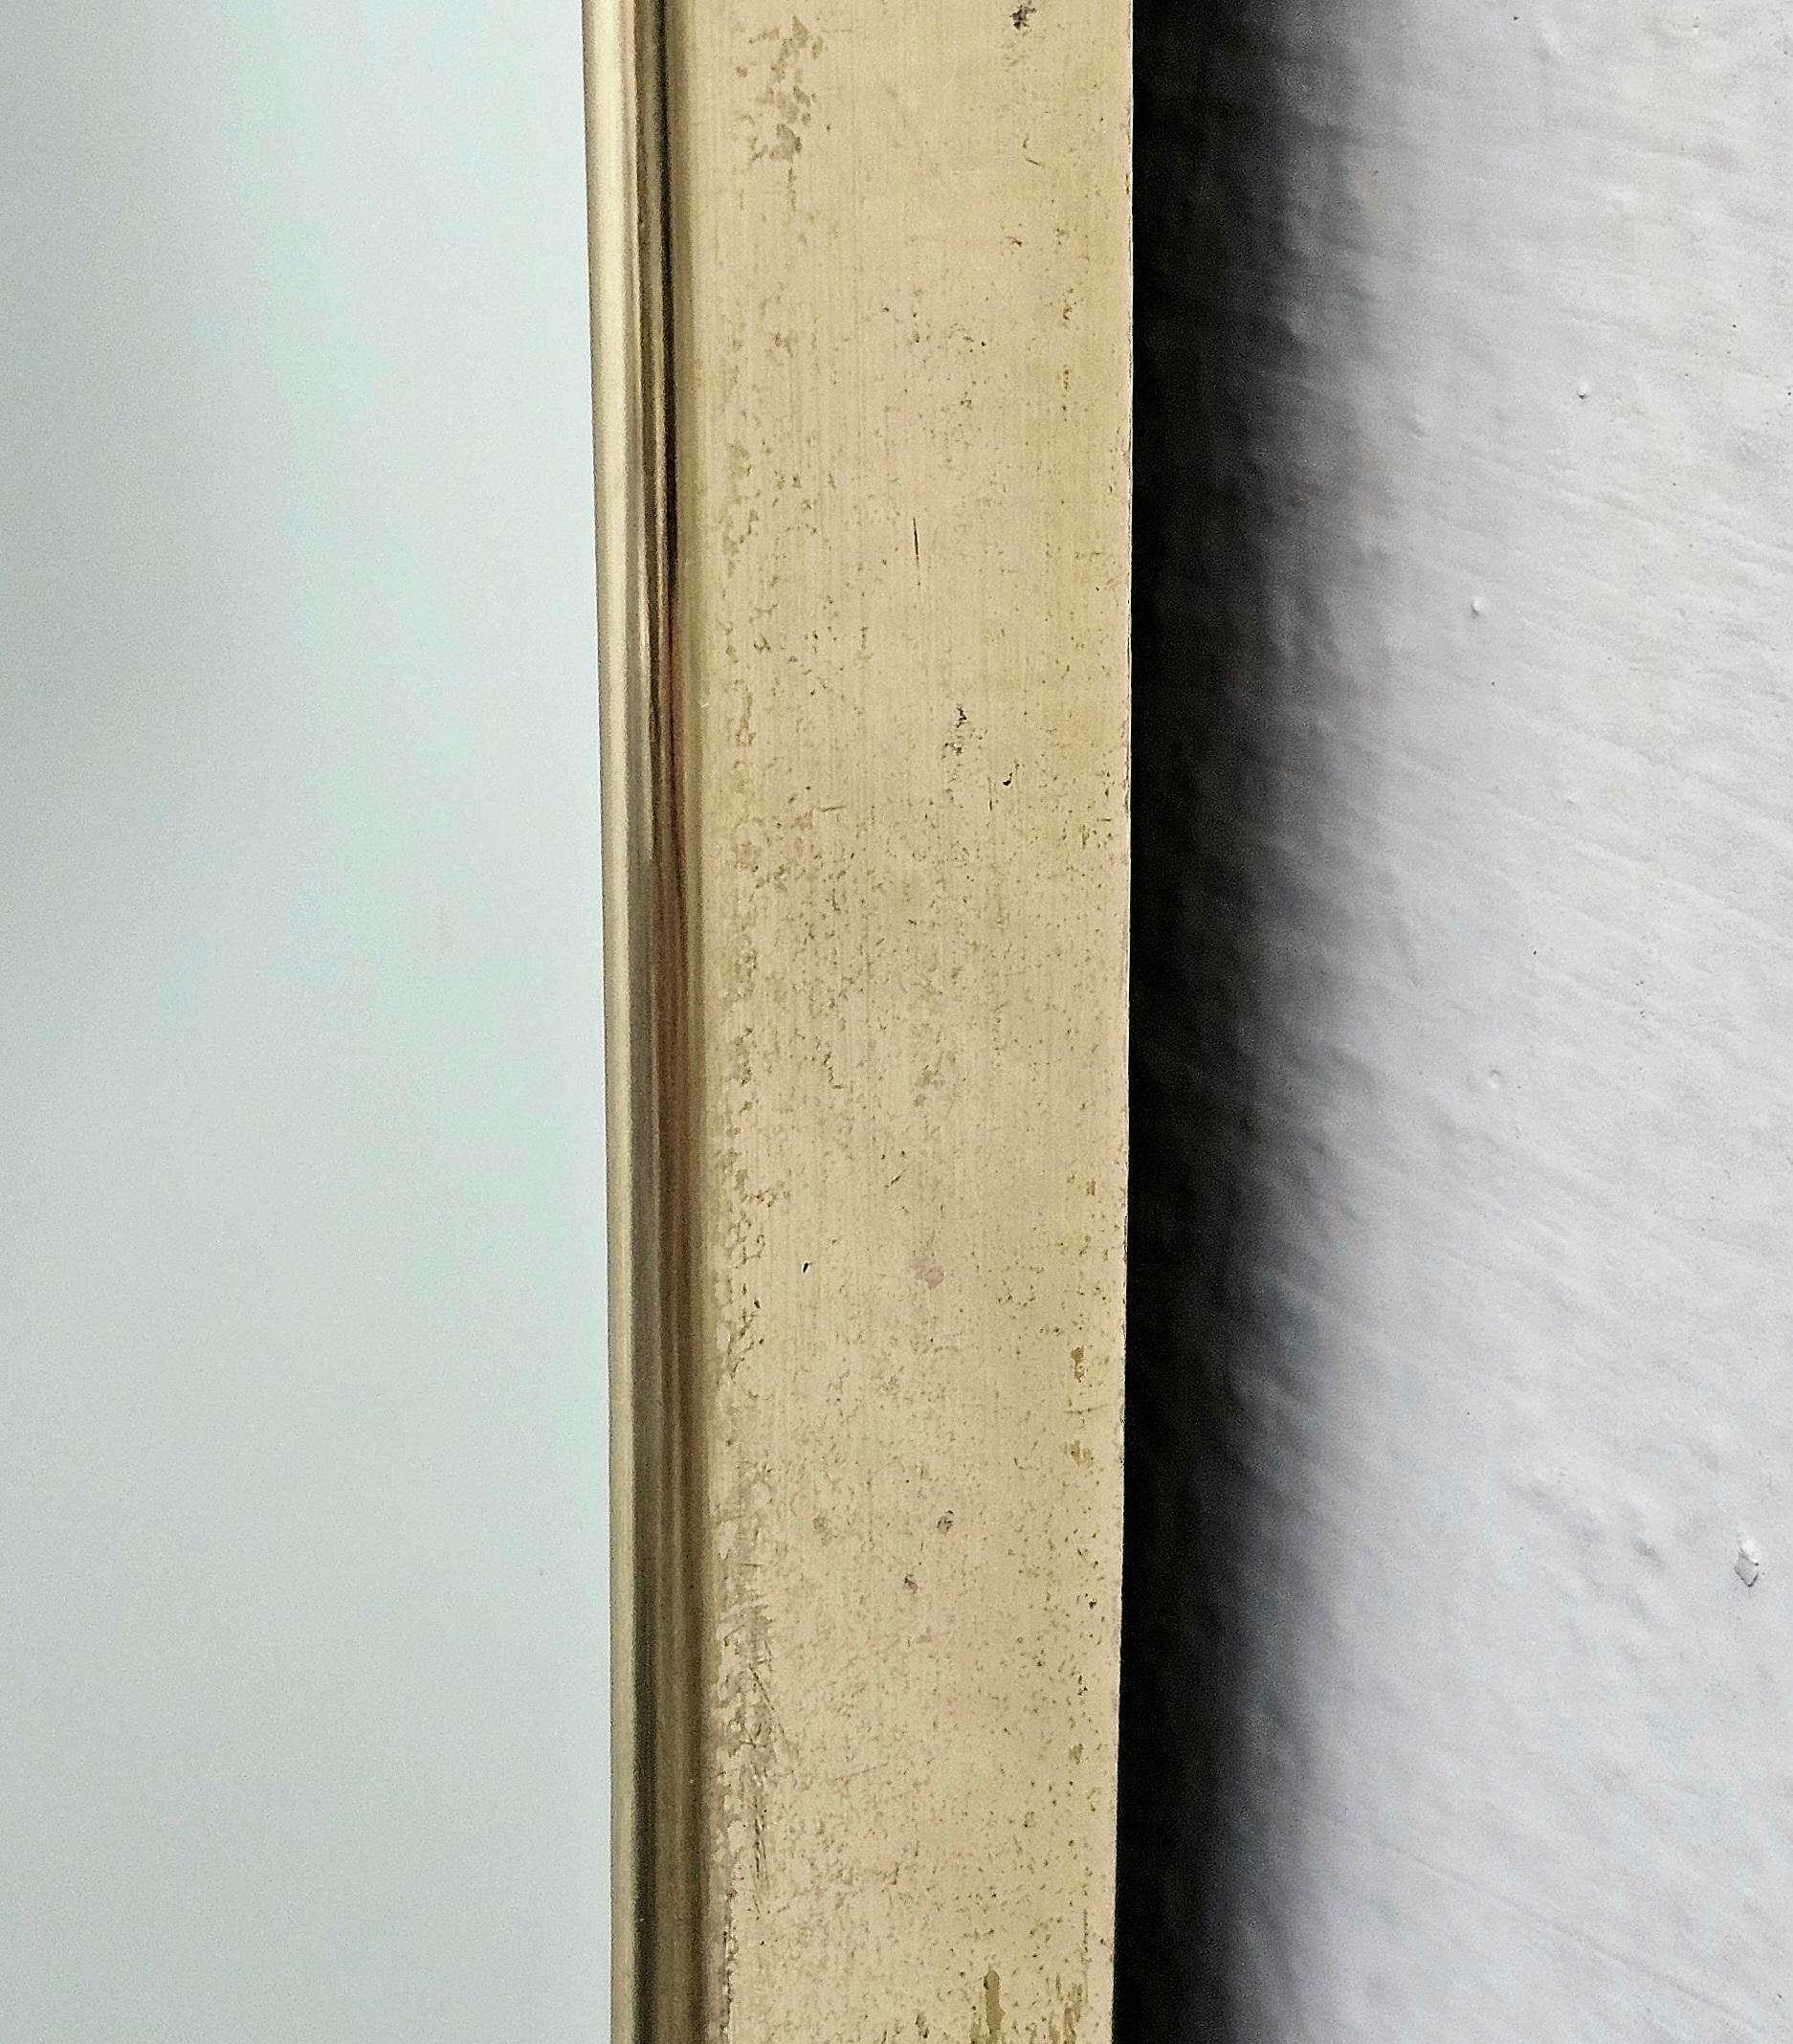 Wall Mirror Brass Attributable to Gio Ponti Midcentury Modern Italian Design 50s 1